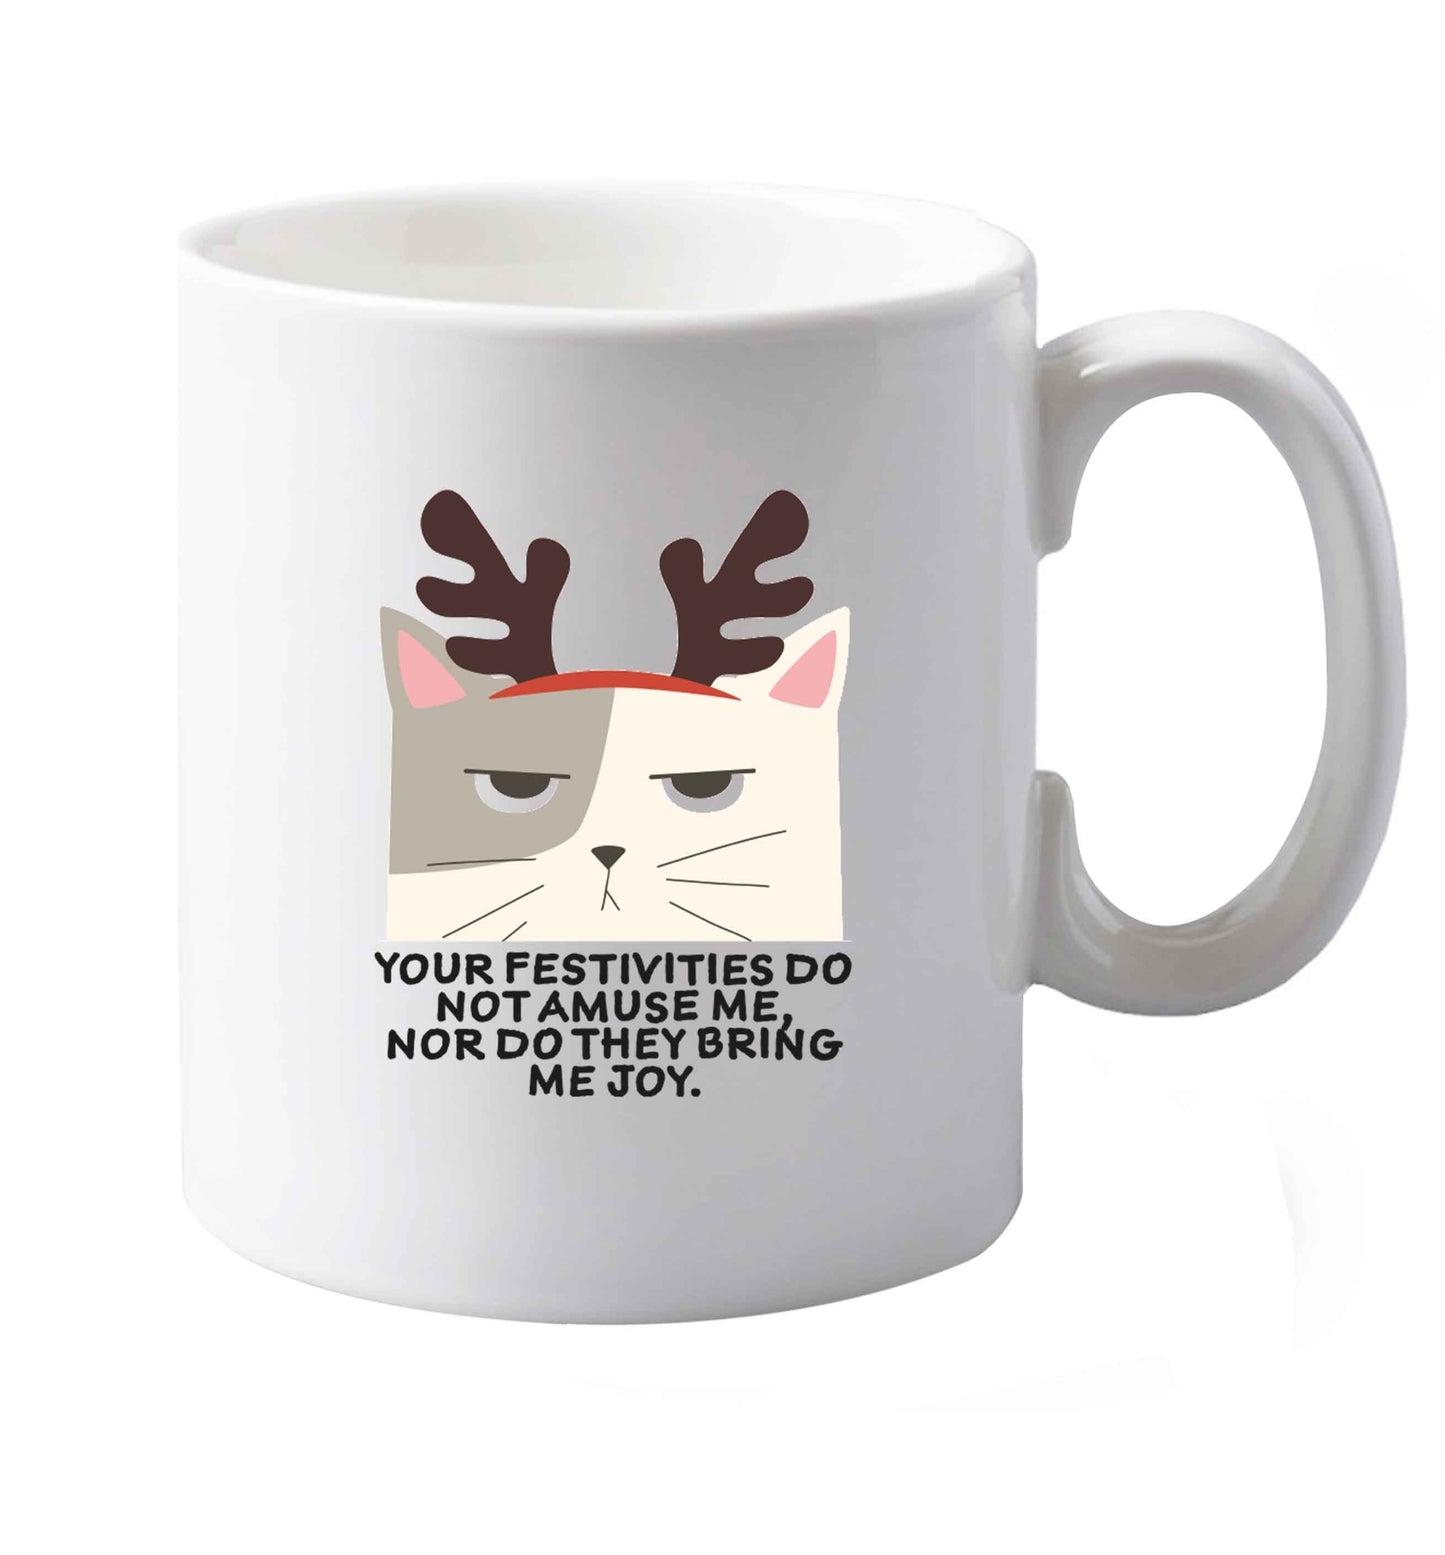 10 oz Your festivities do not amuse me nor do they bring me joy ceramic mug both sides